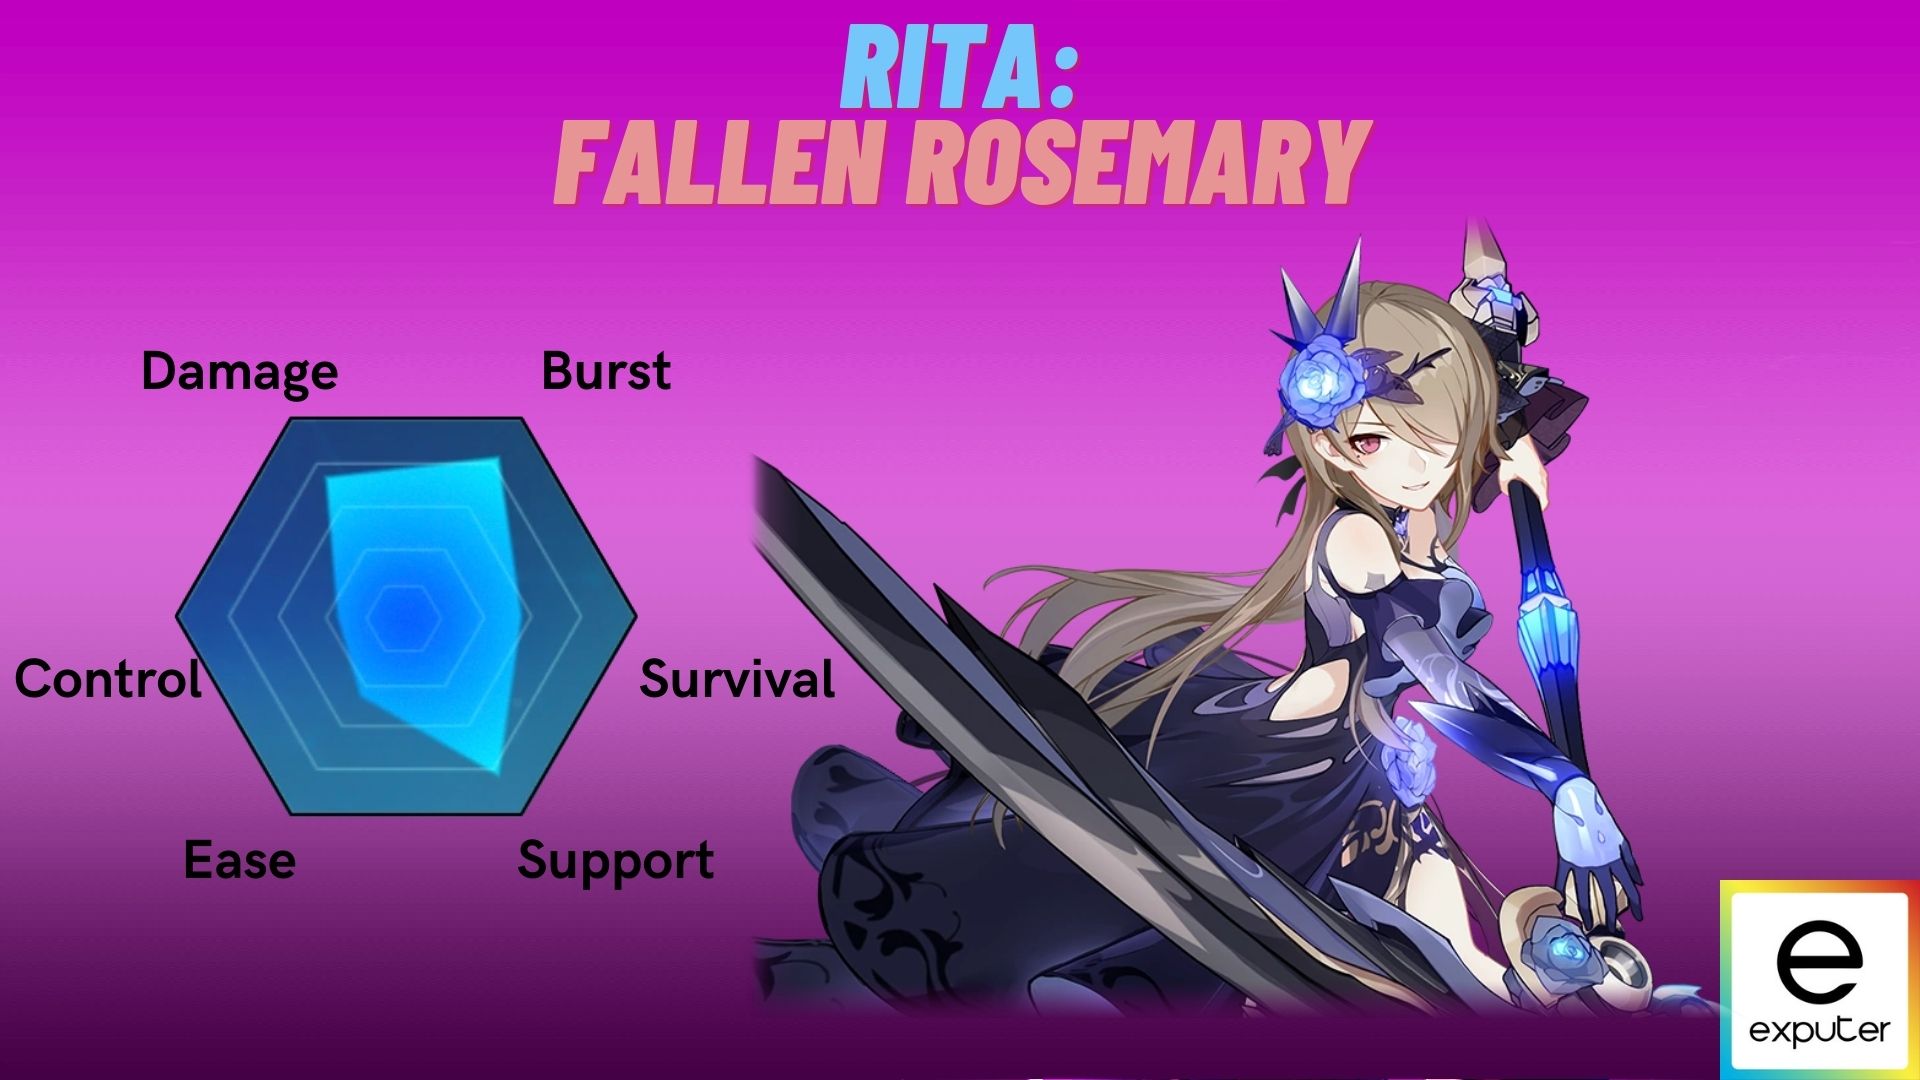 Rita's Fallen Rosemary Battlesuit in Honkai Impact.